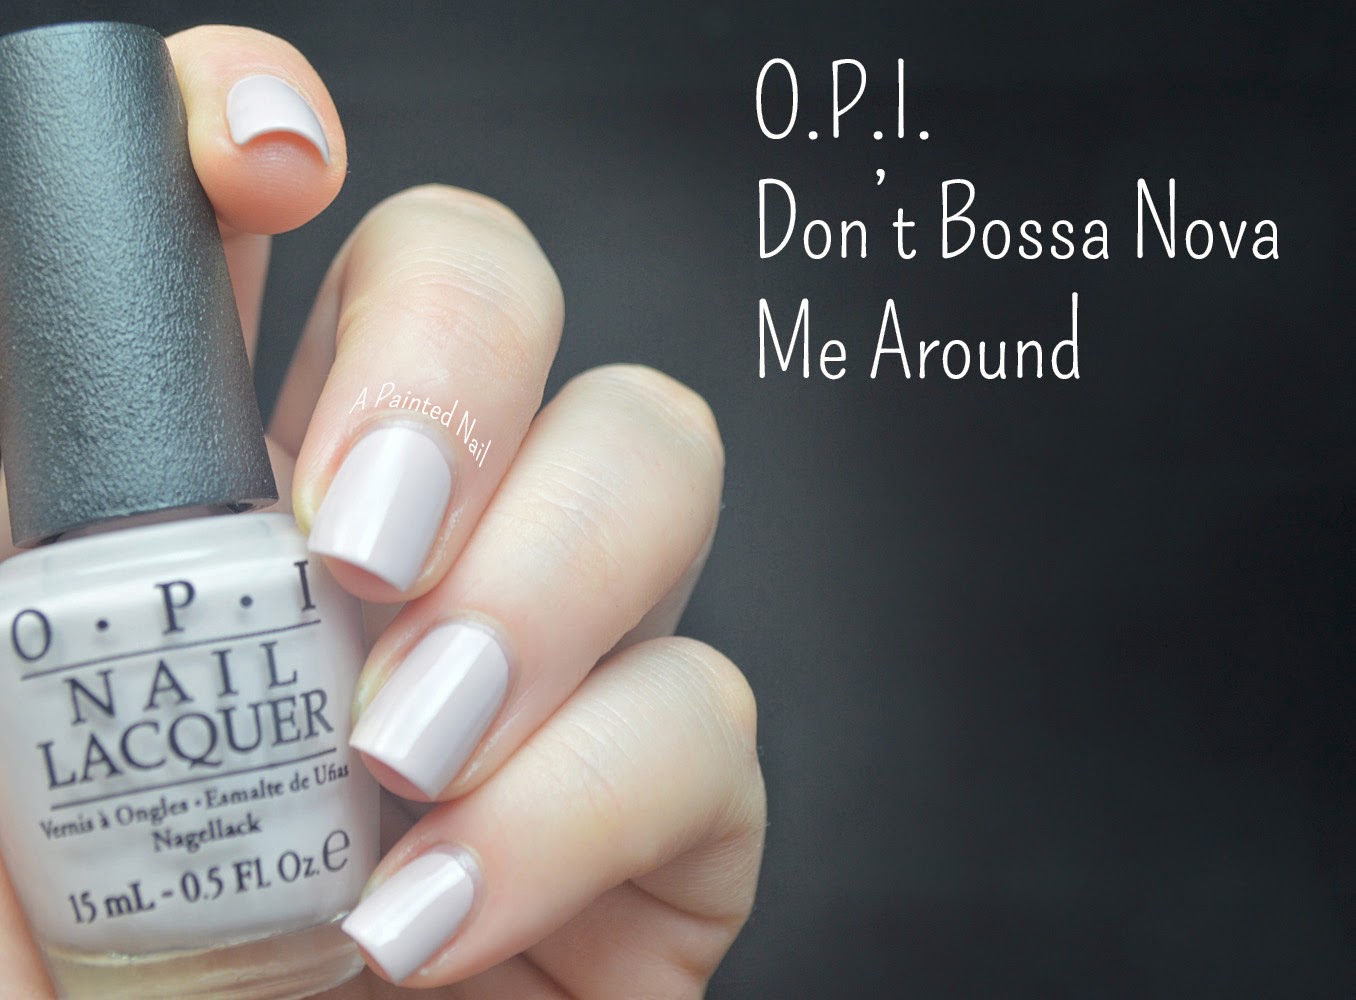 5. OPI "Don't Bossa Nova Me Around" Nail Polish - wide 2